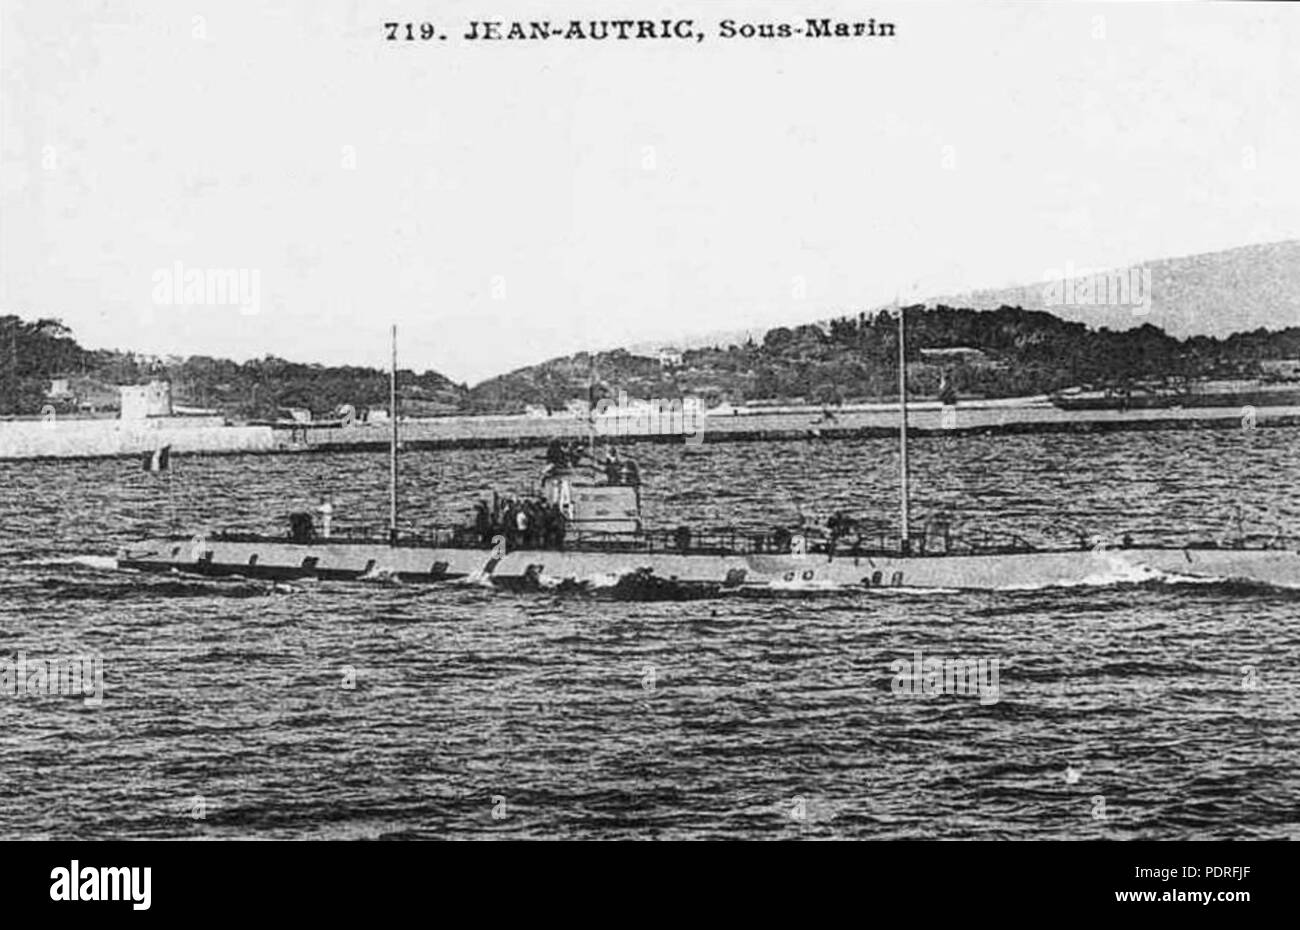 8 Sous-marin Jean-Autric WWI Stock Photo